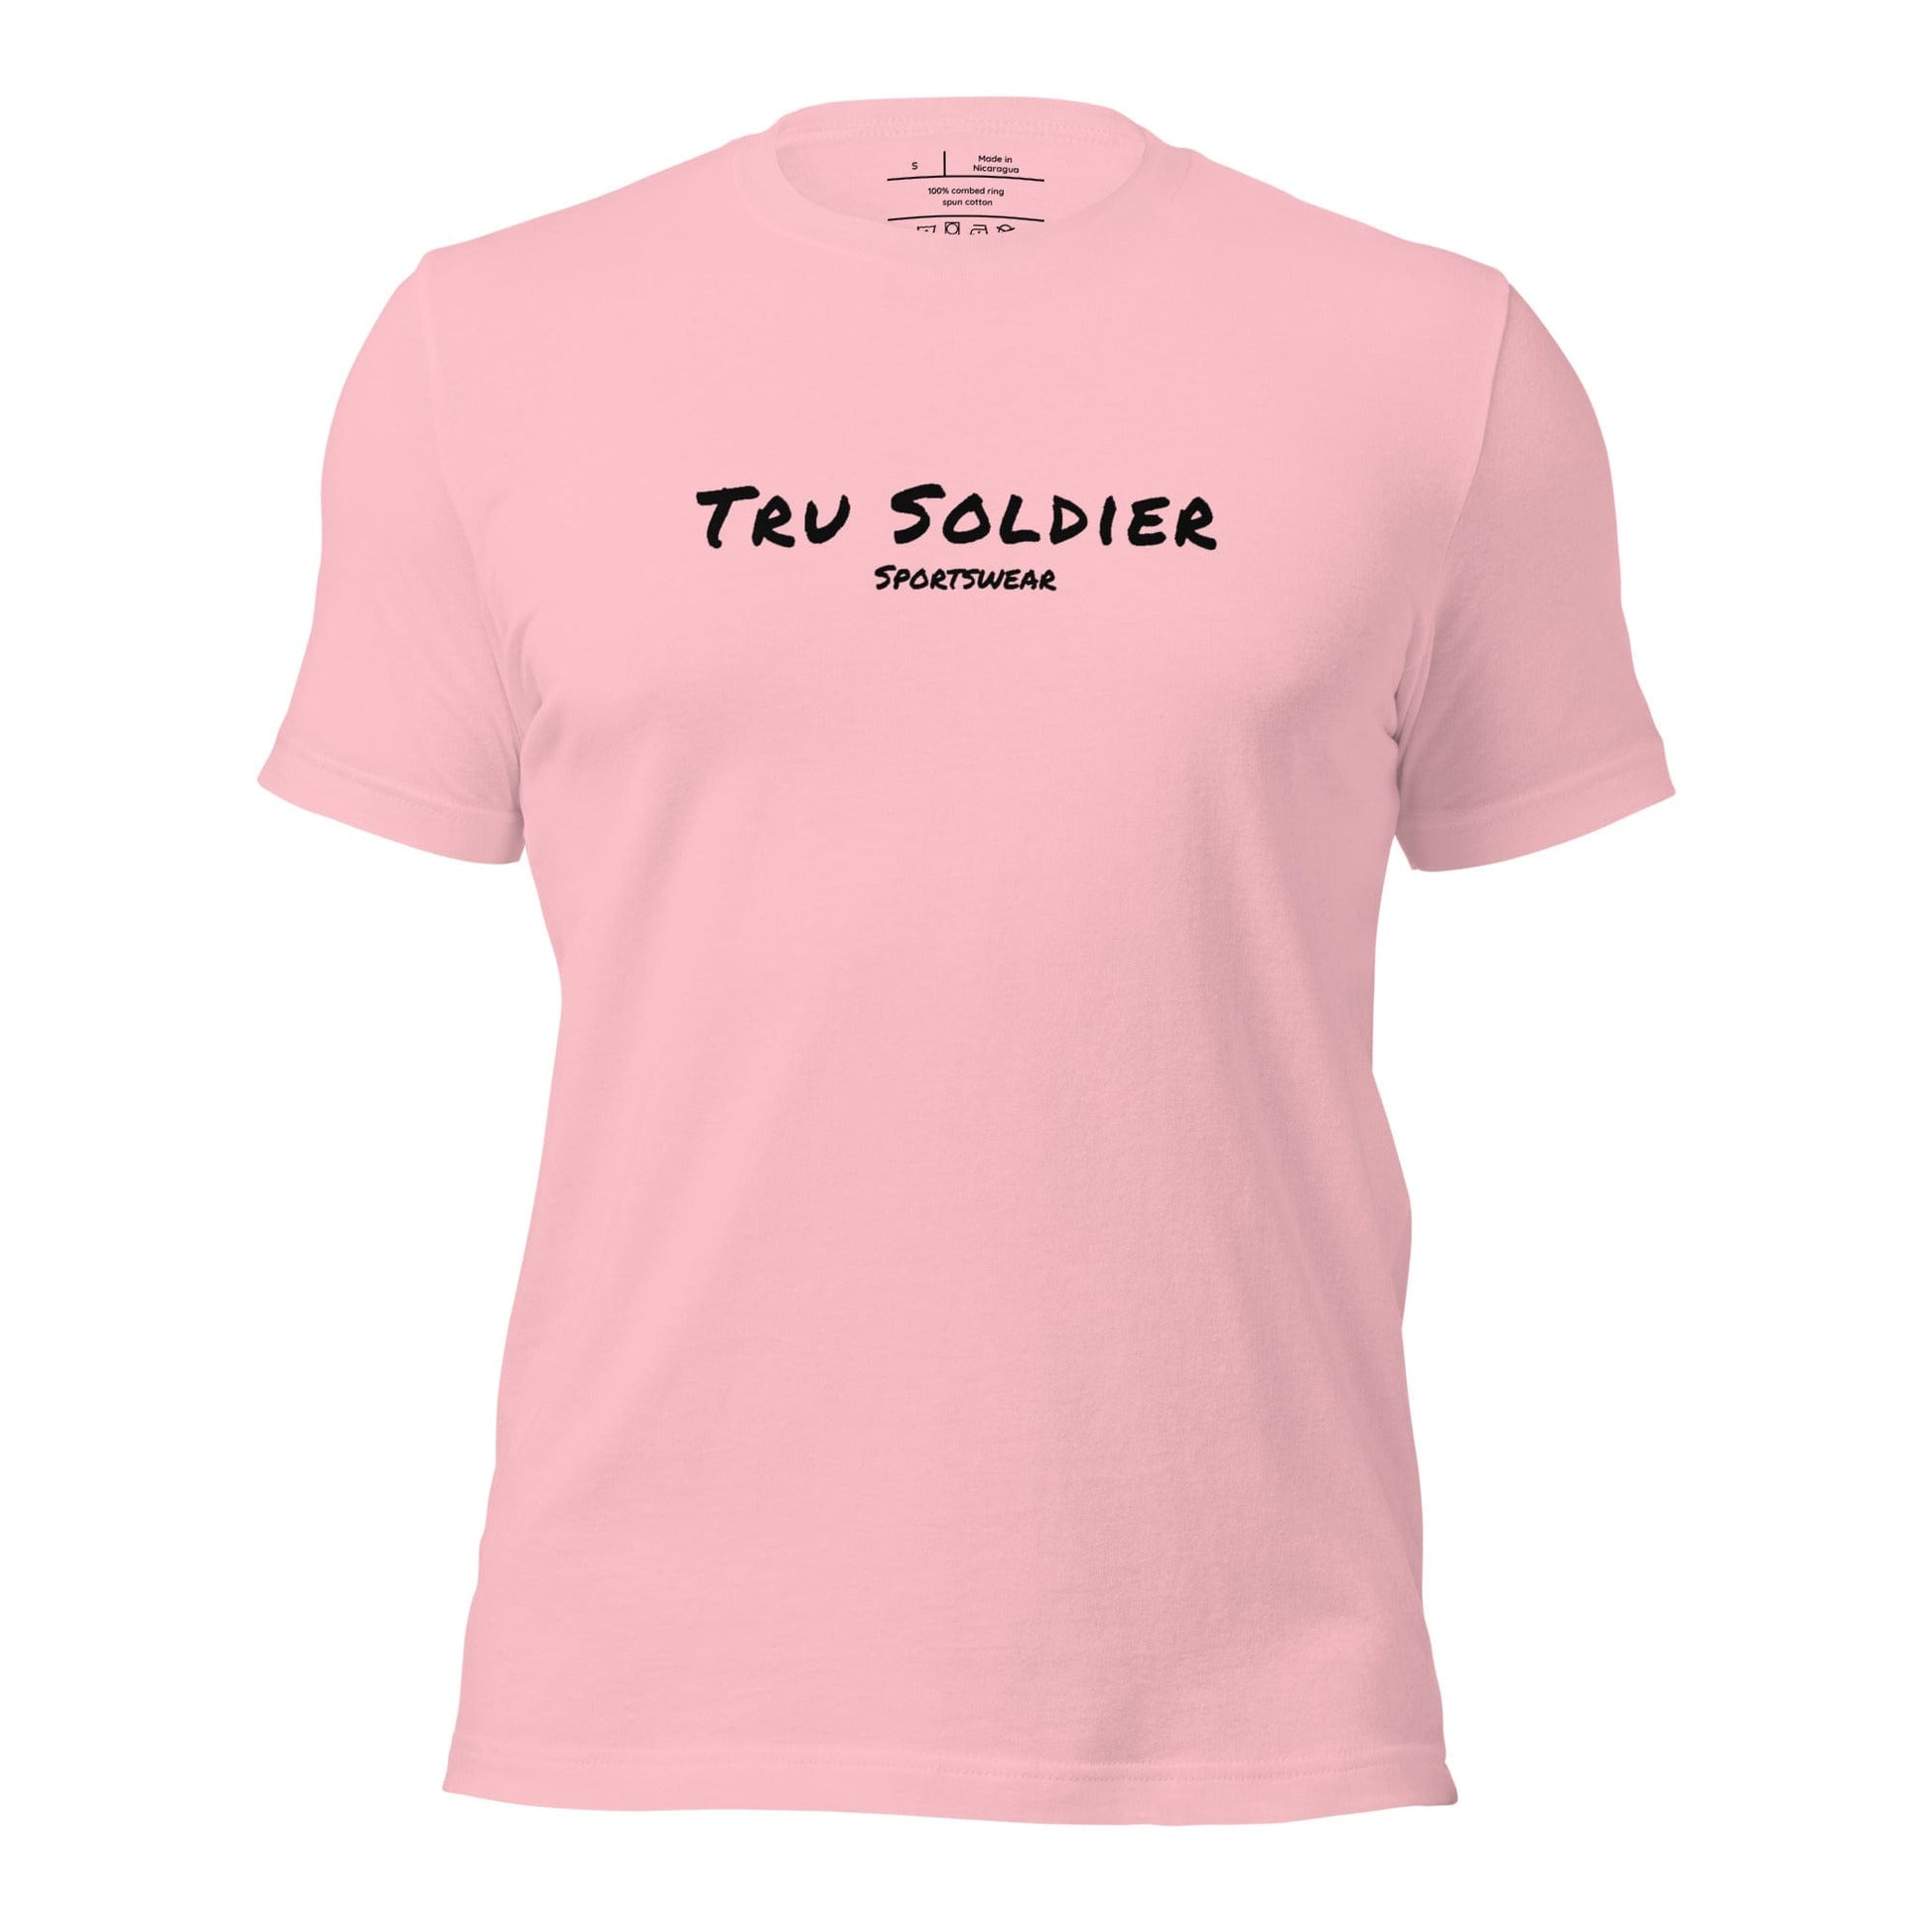 Tru Soldier Sportswear  Pink / S Unisex t-shirt